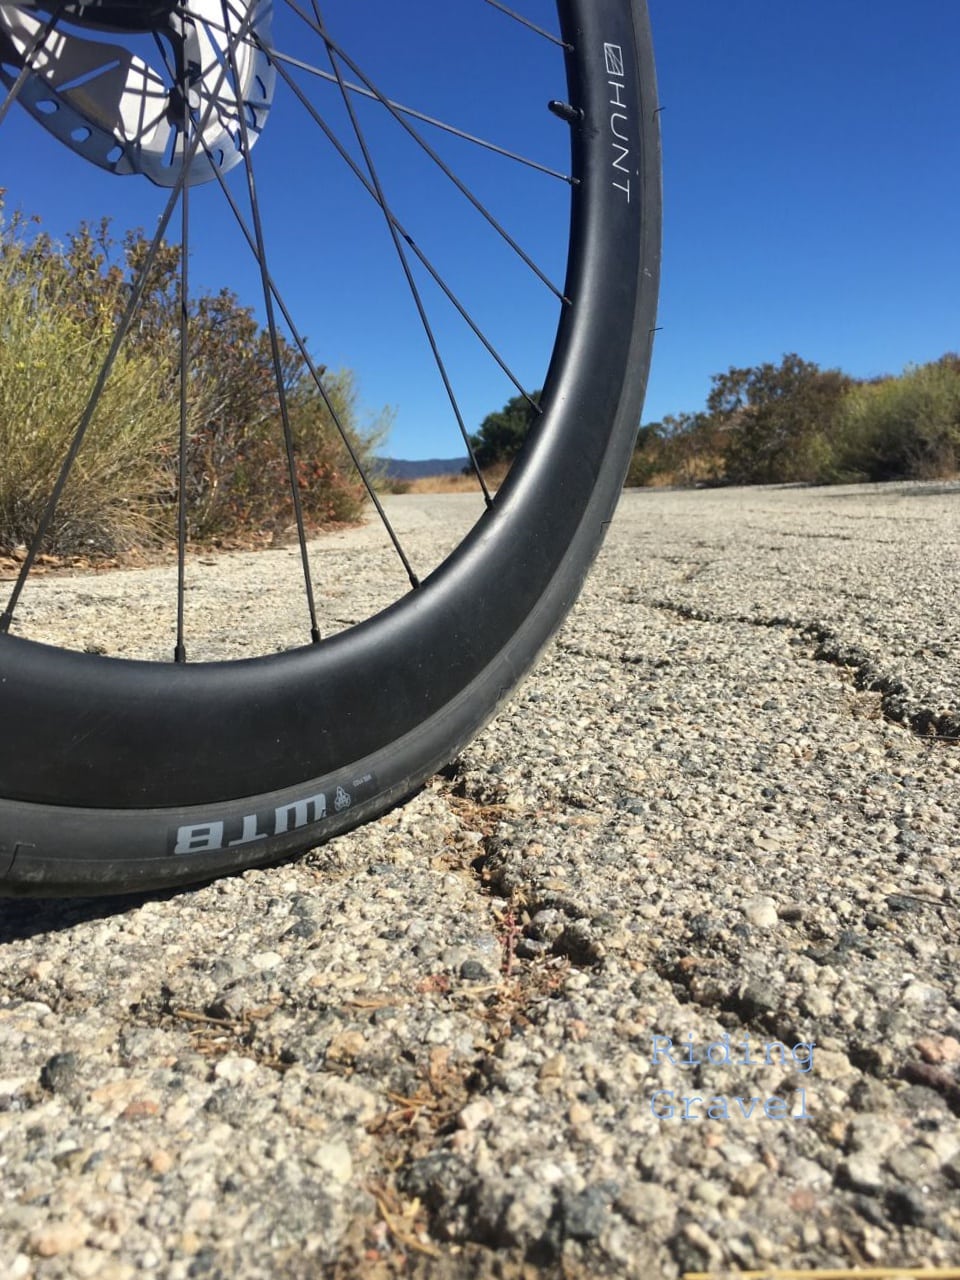 gravel tyres on road bike